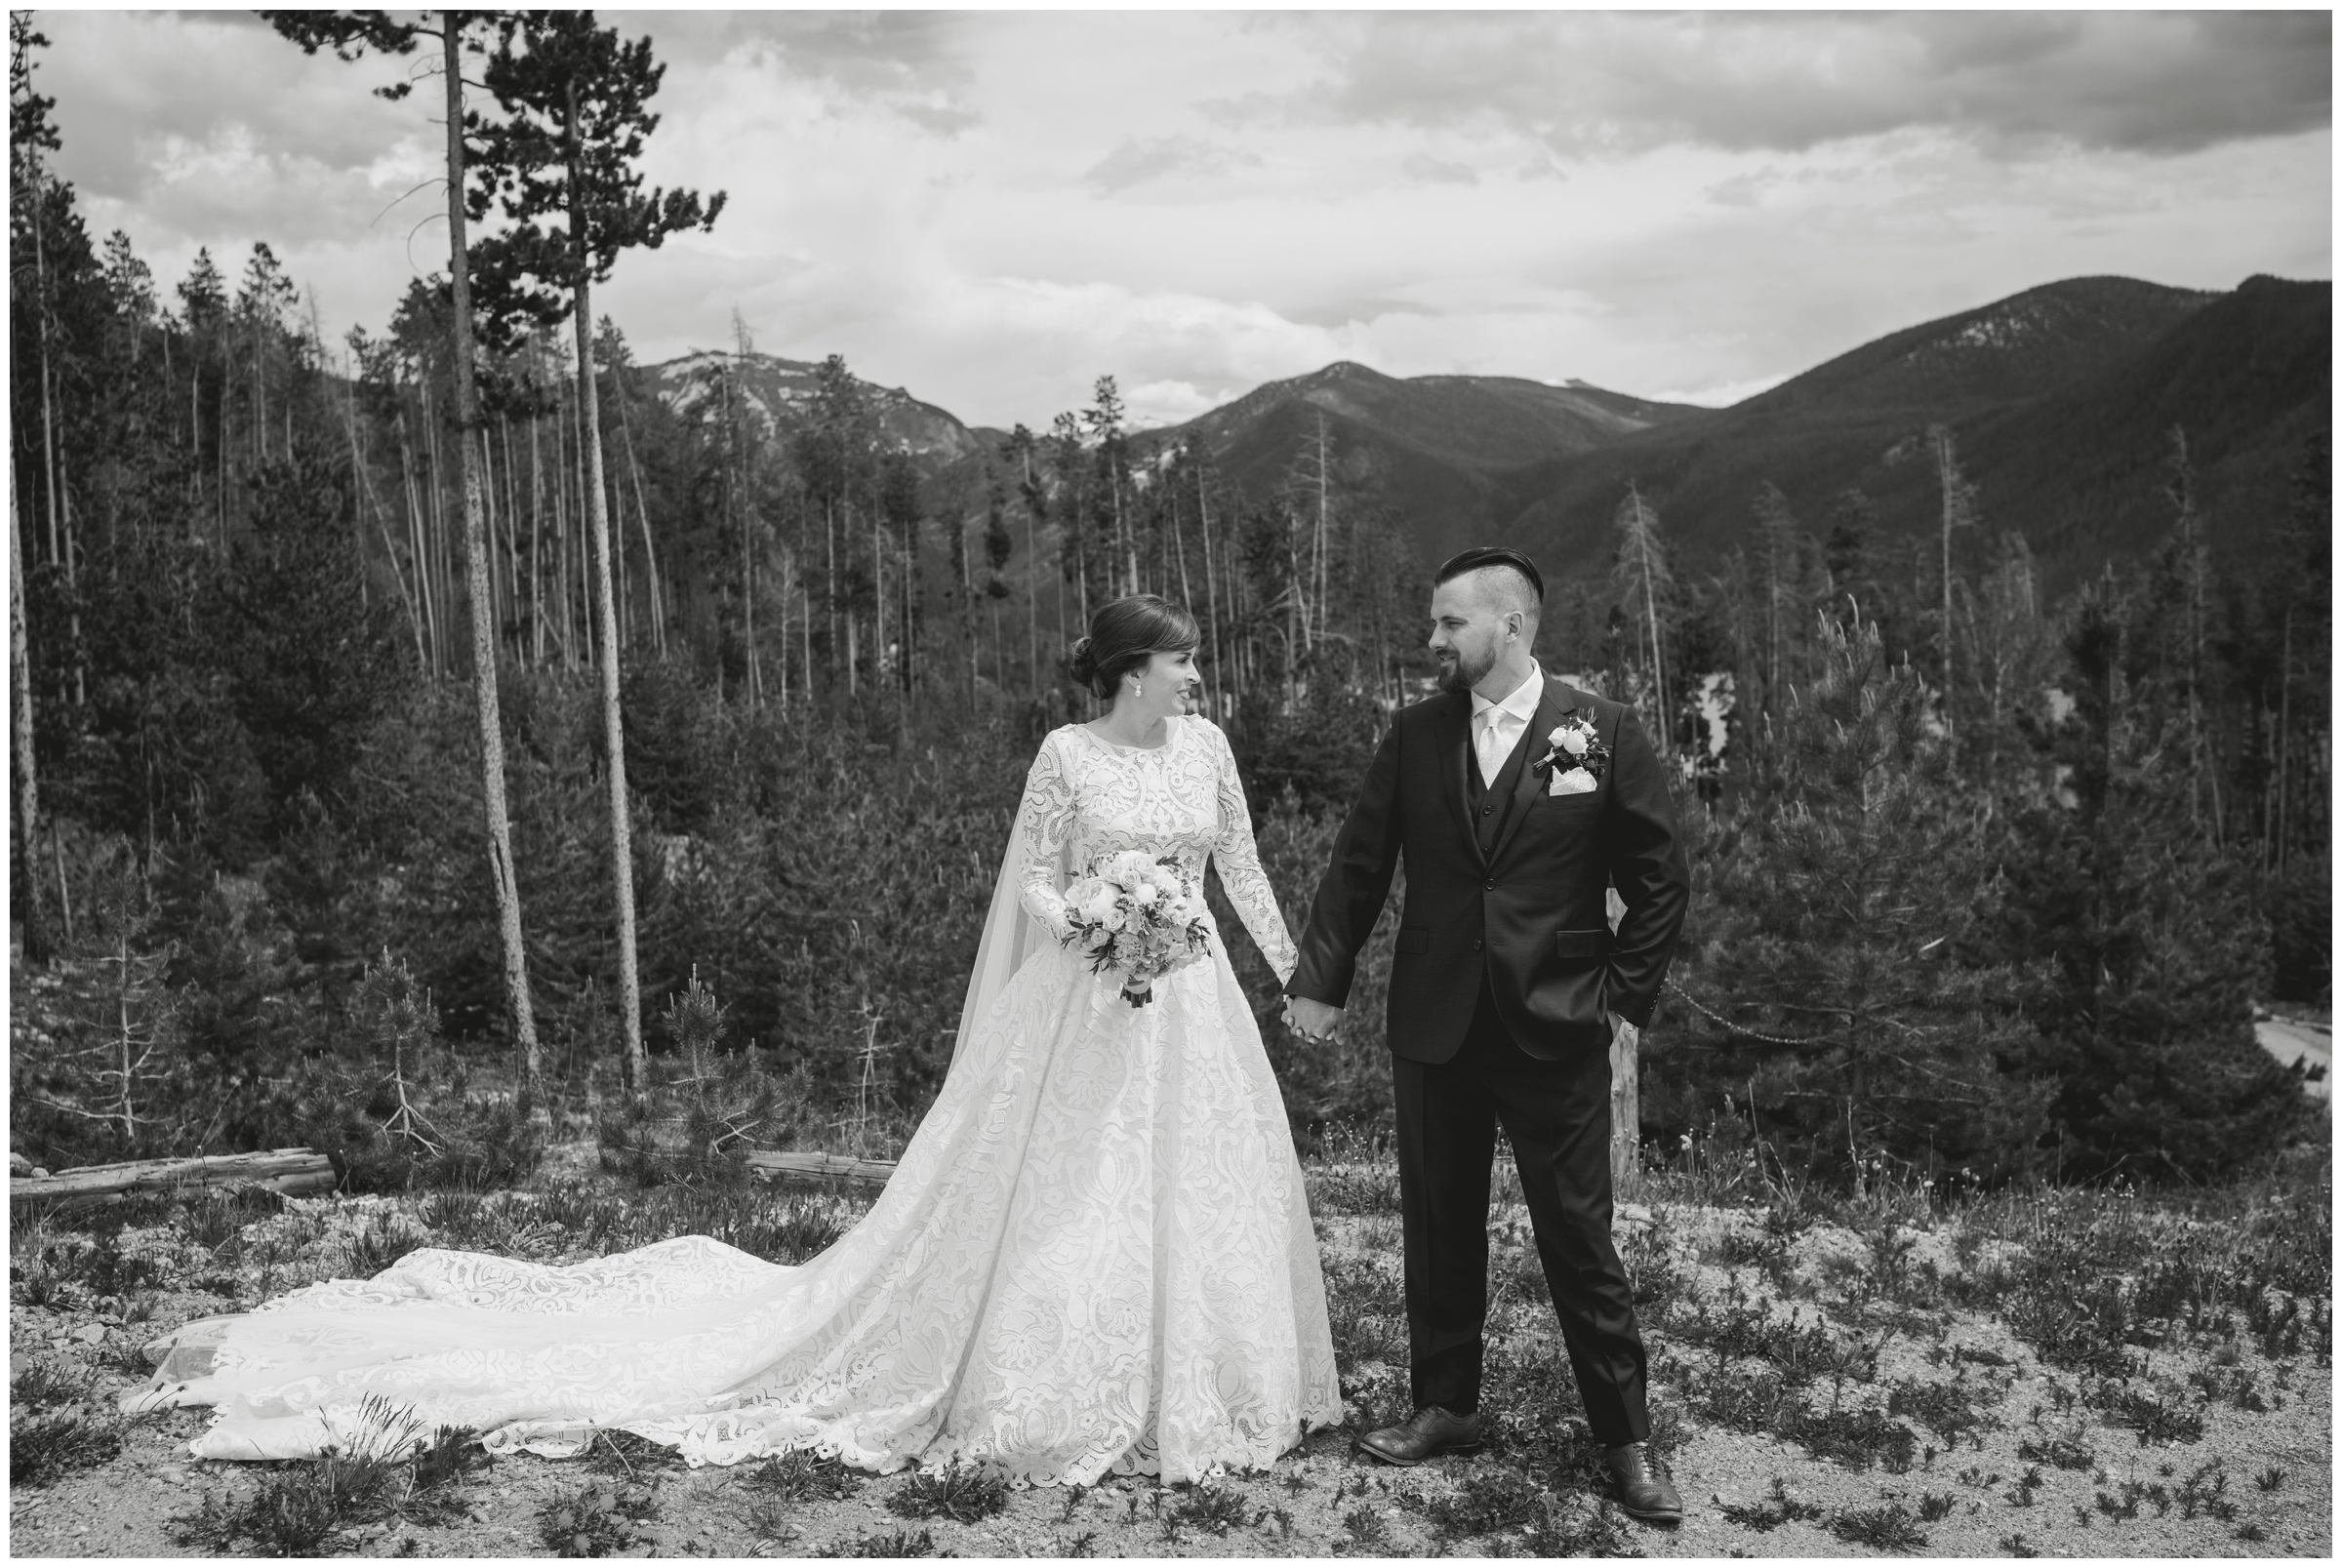 Intimate Grand Lake Lodge wedding photos by Colorado mountain wedding photographer Plum Pretty Photography